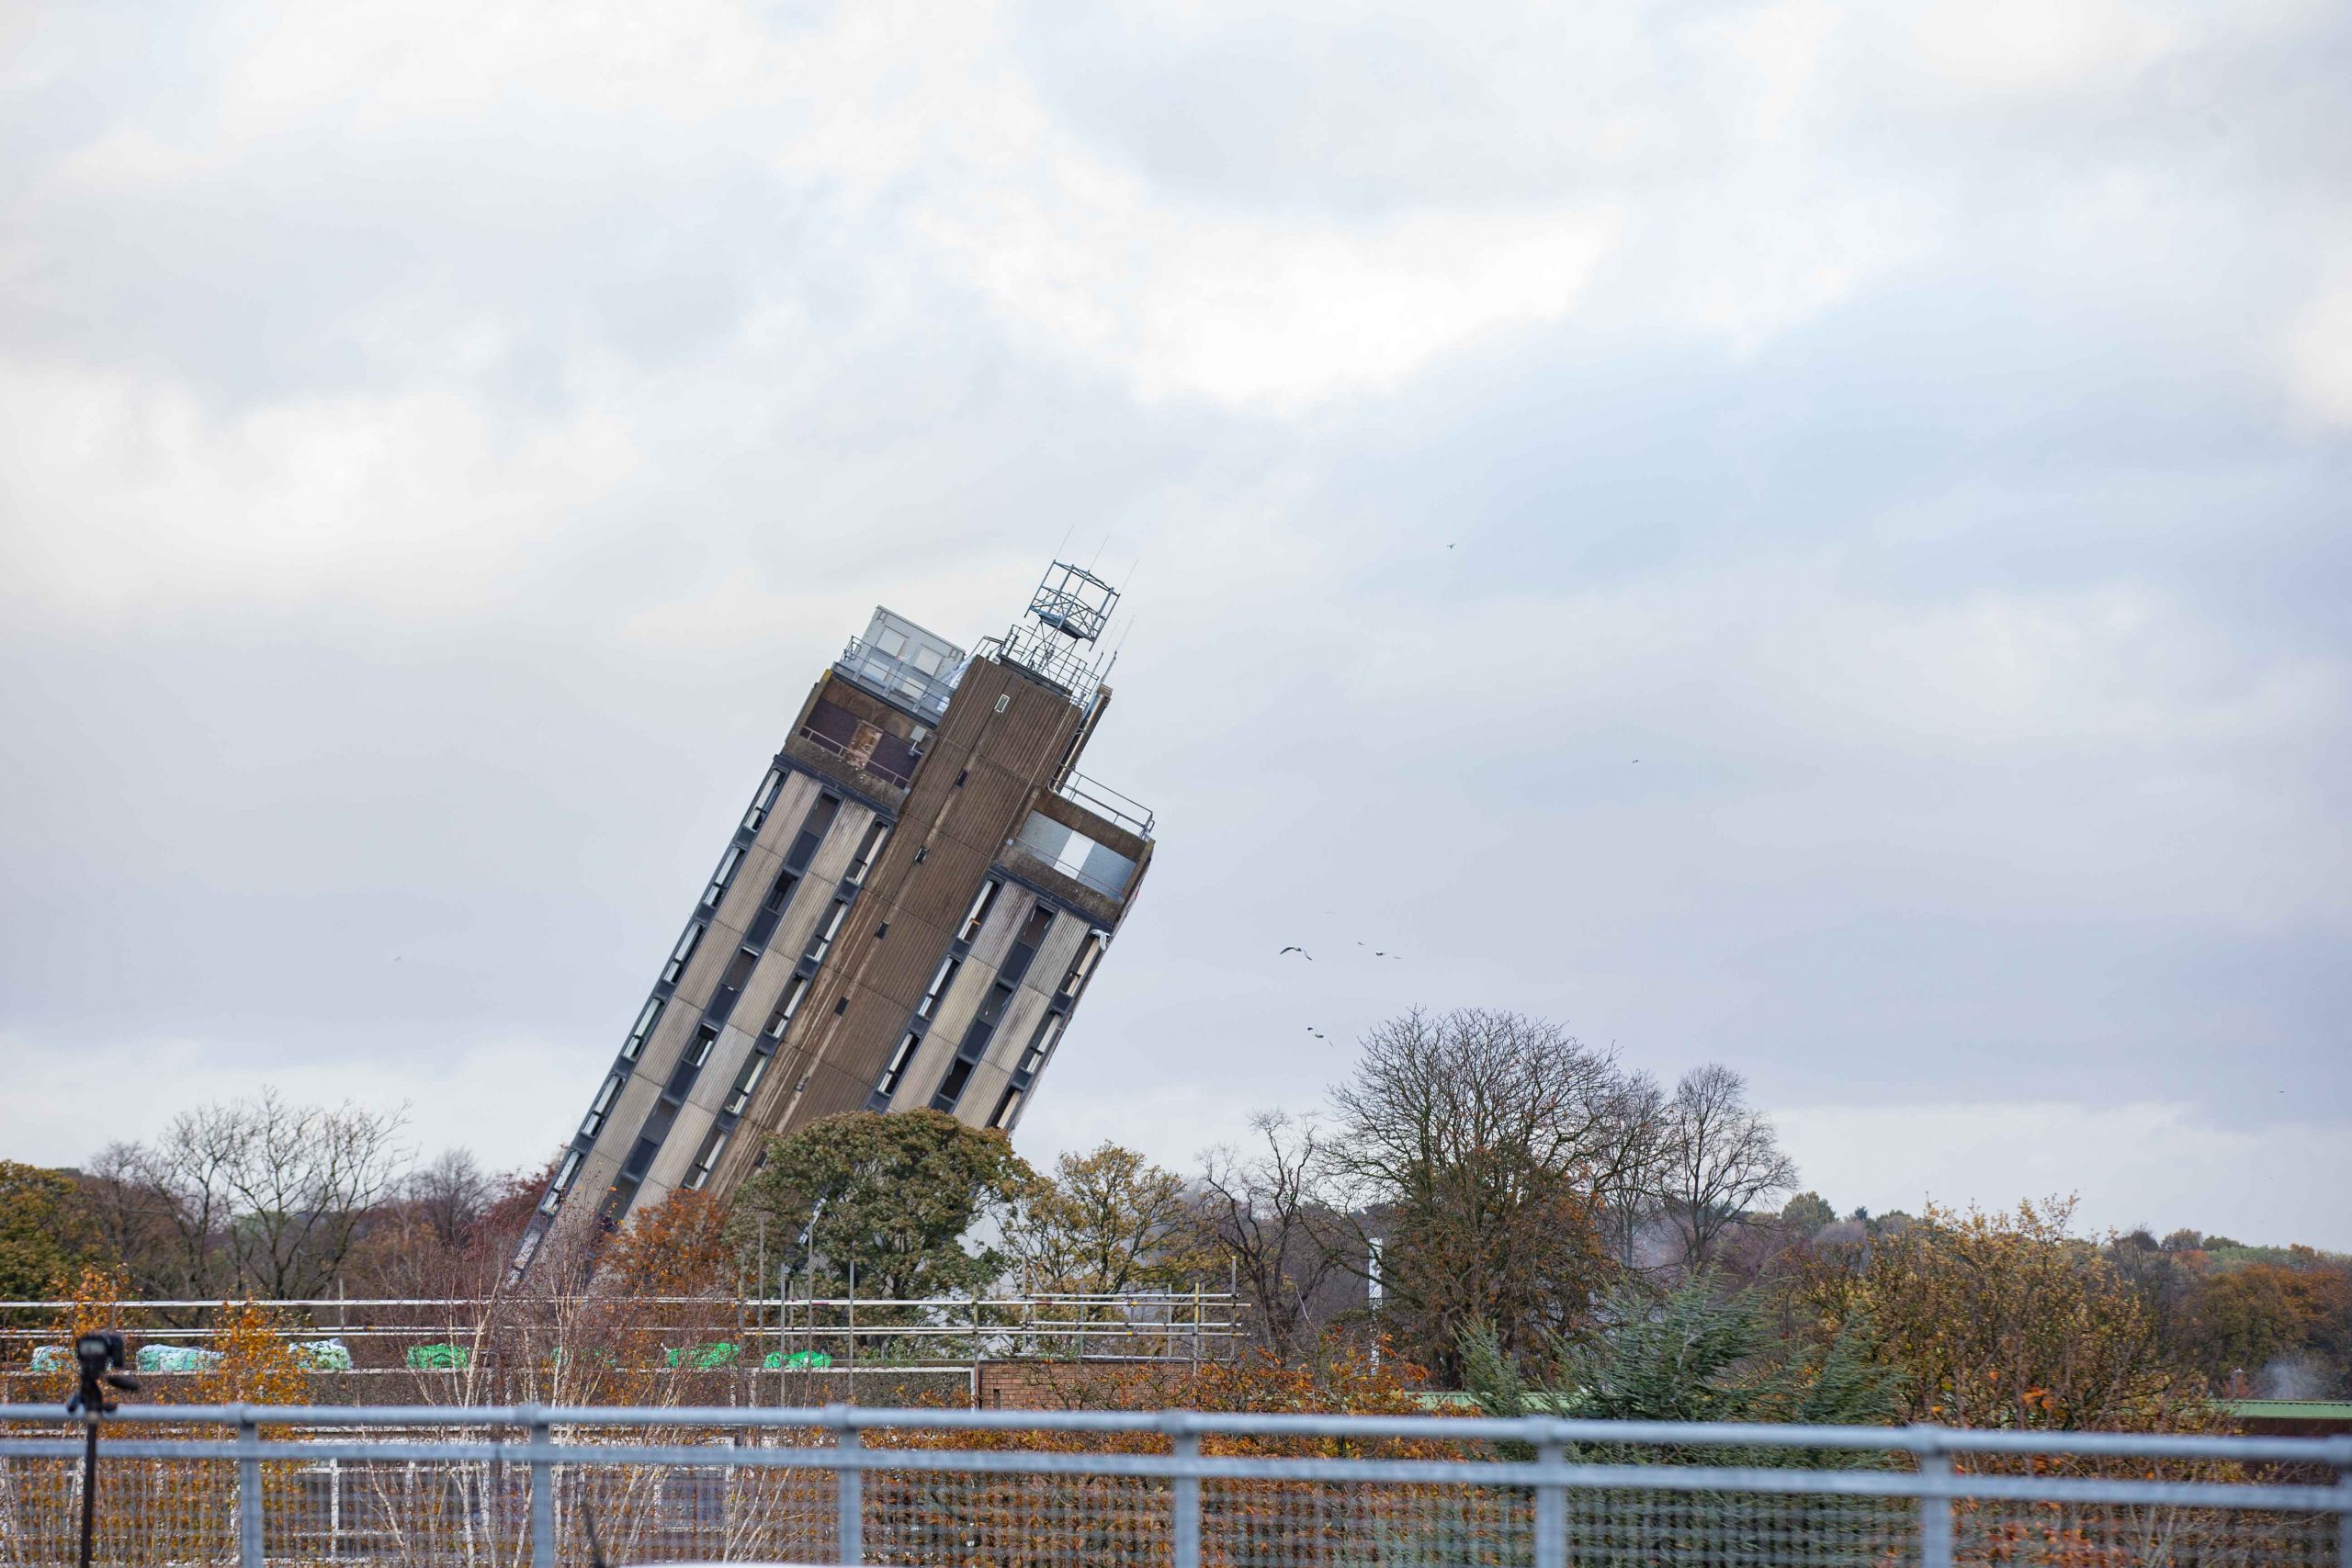 Early morning explosion changes Wrexham skyline forever